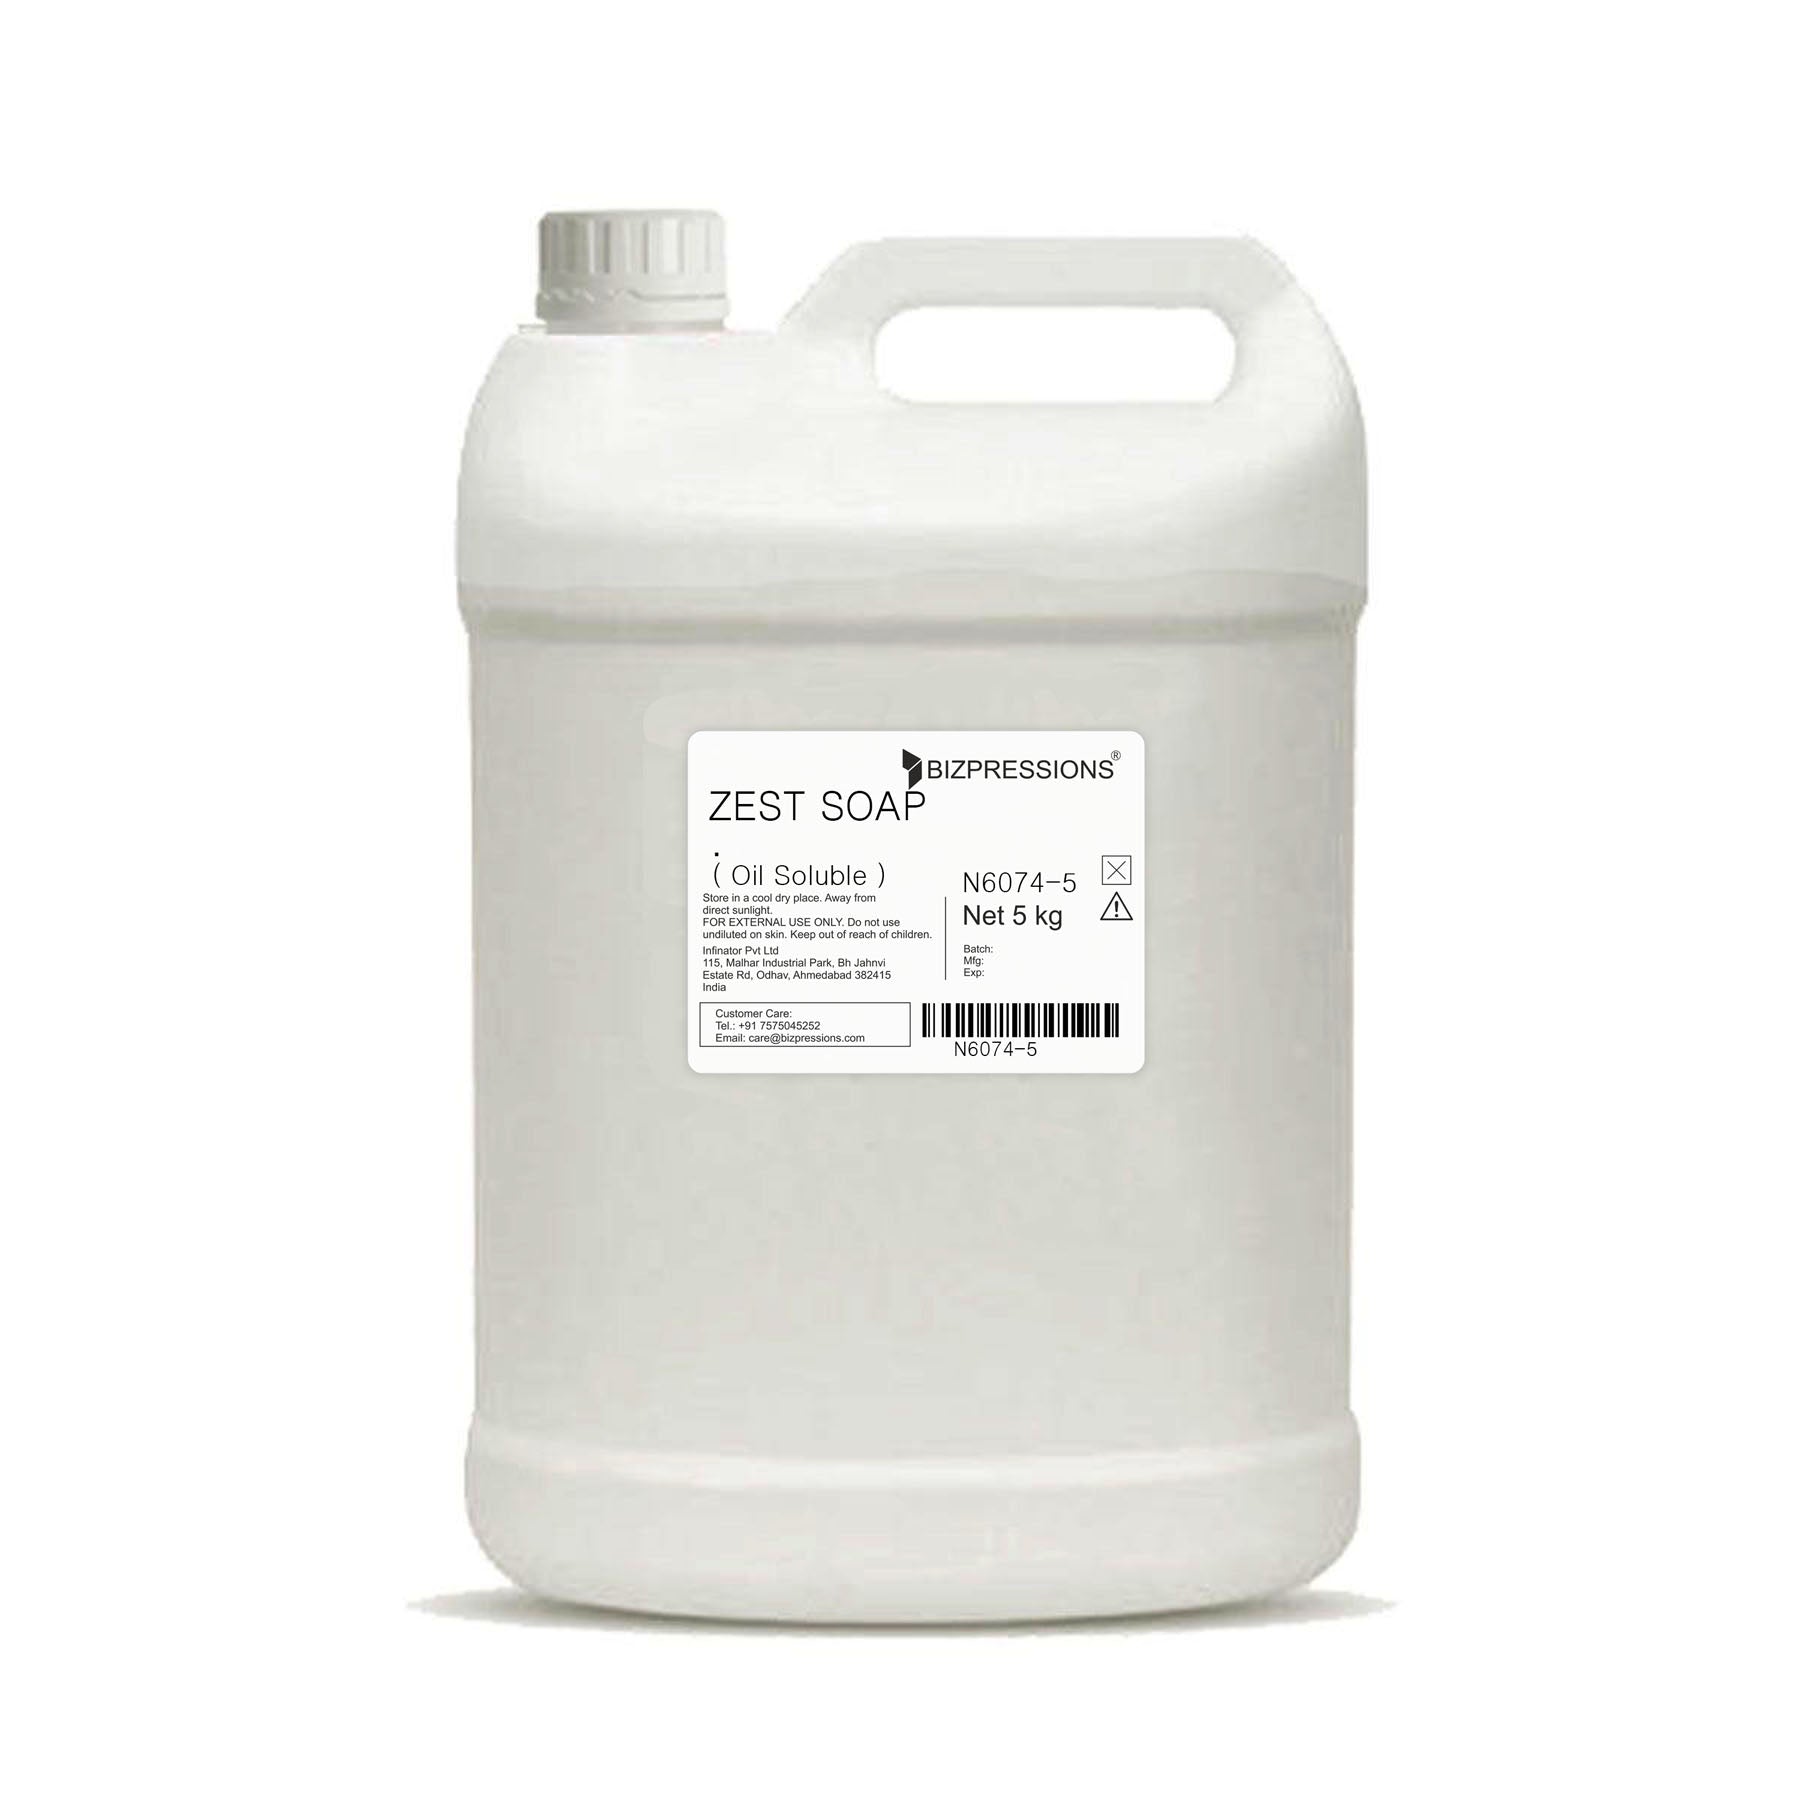 ZEST SOAP - Fragrance ( Oil Soluble ) - 5 kg